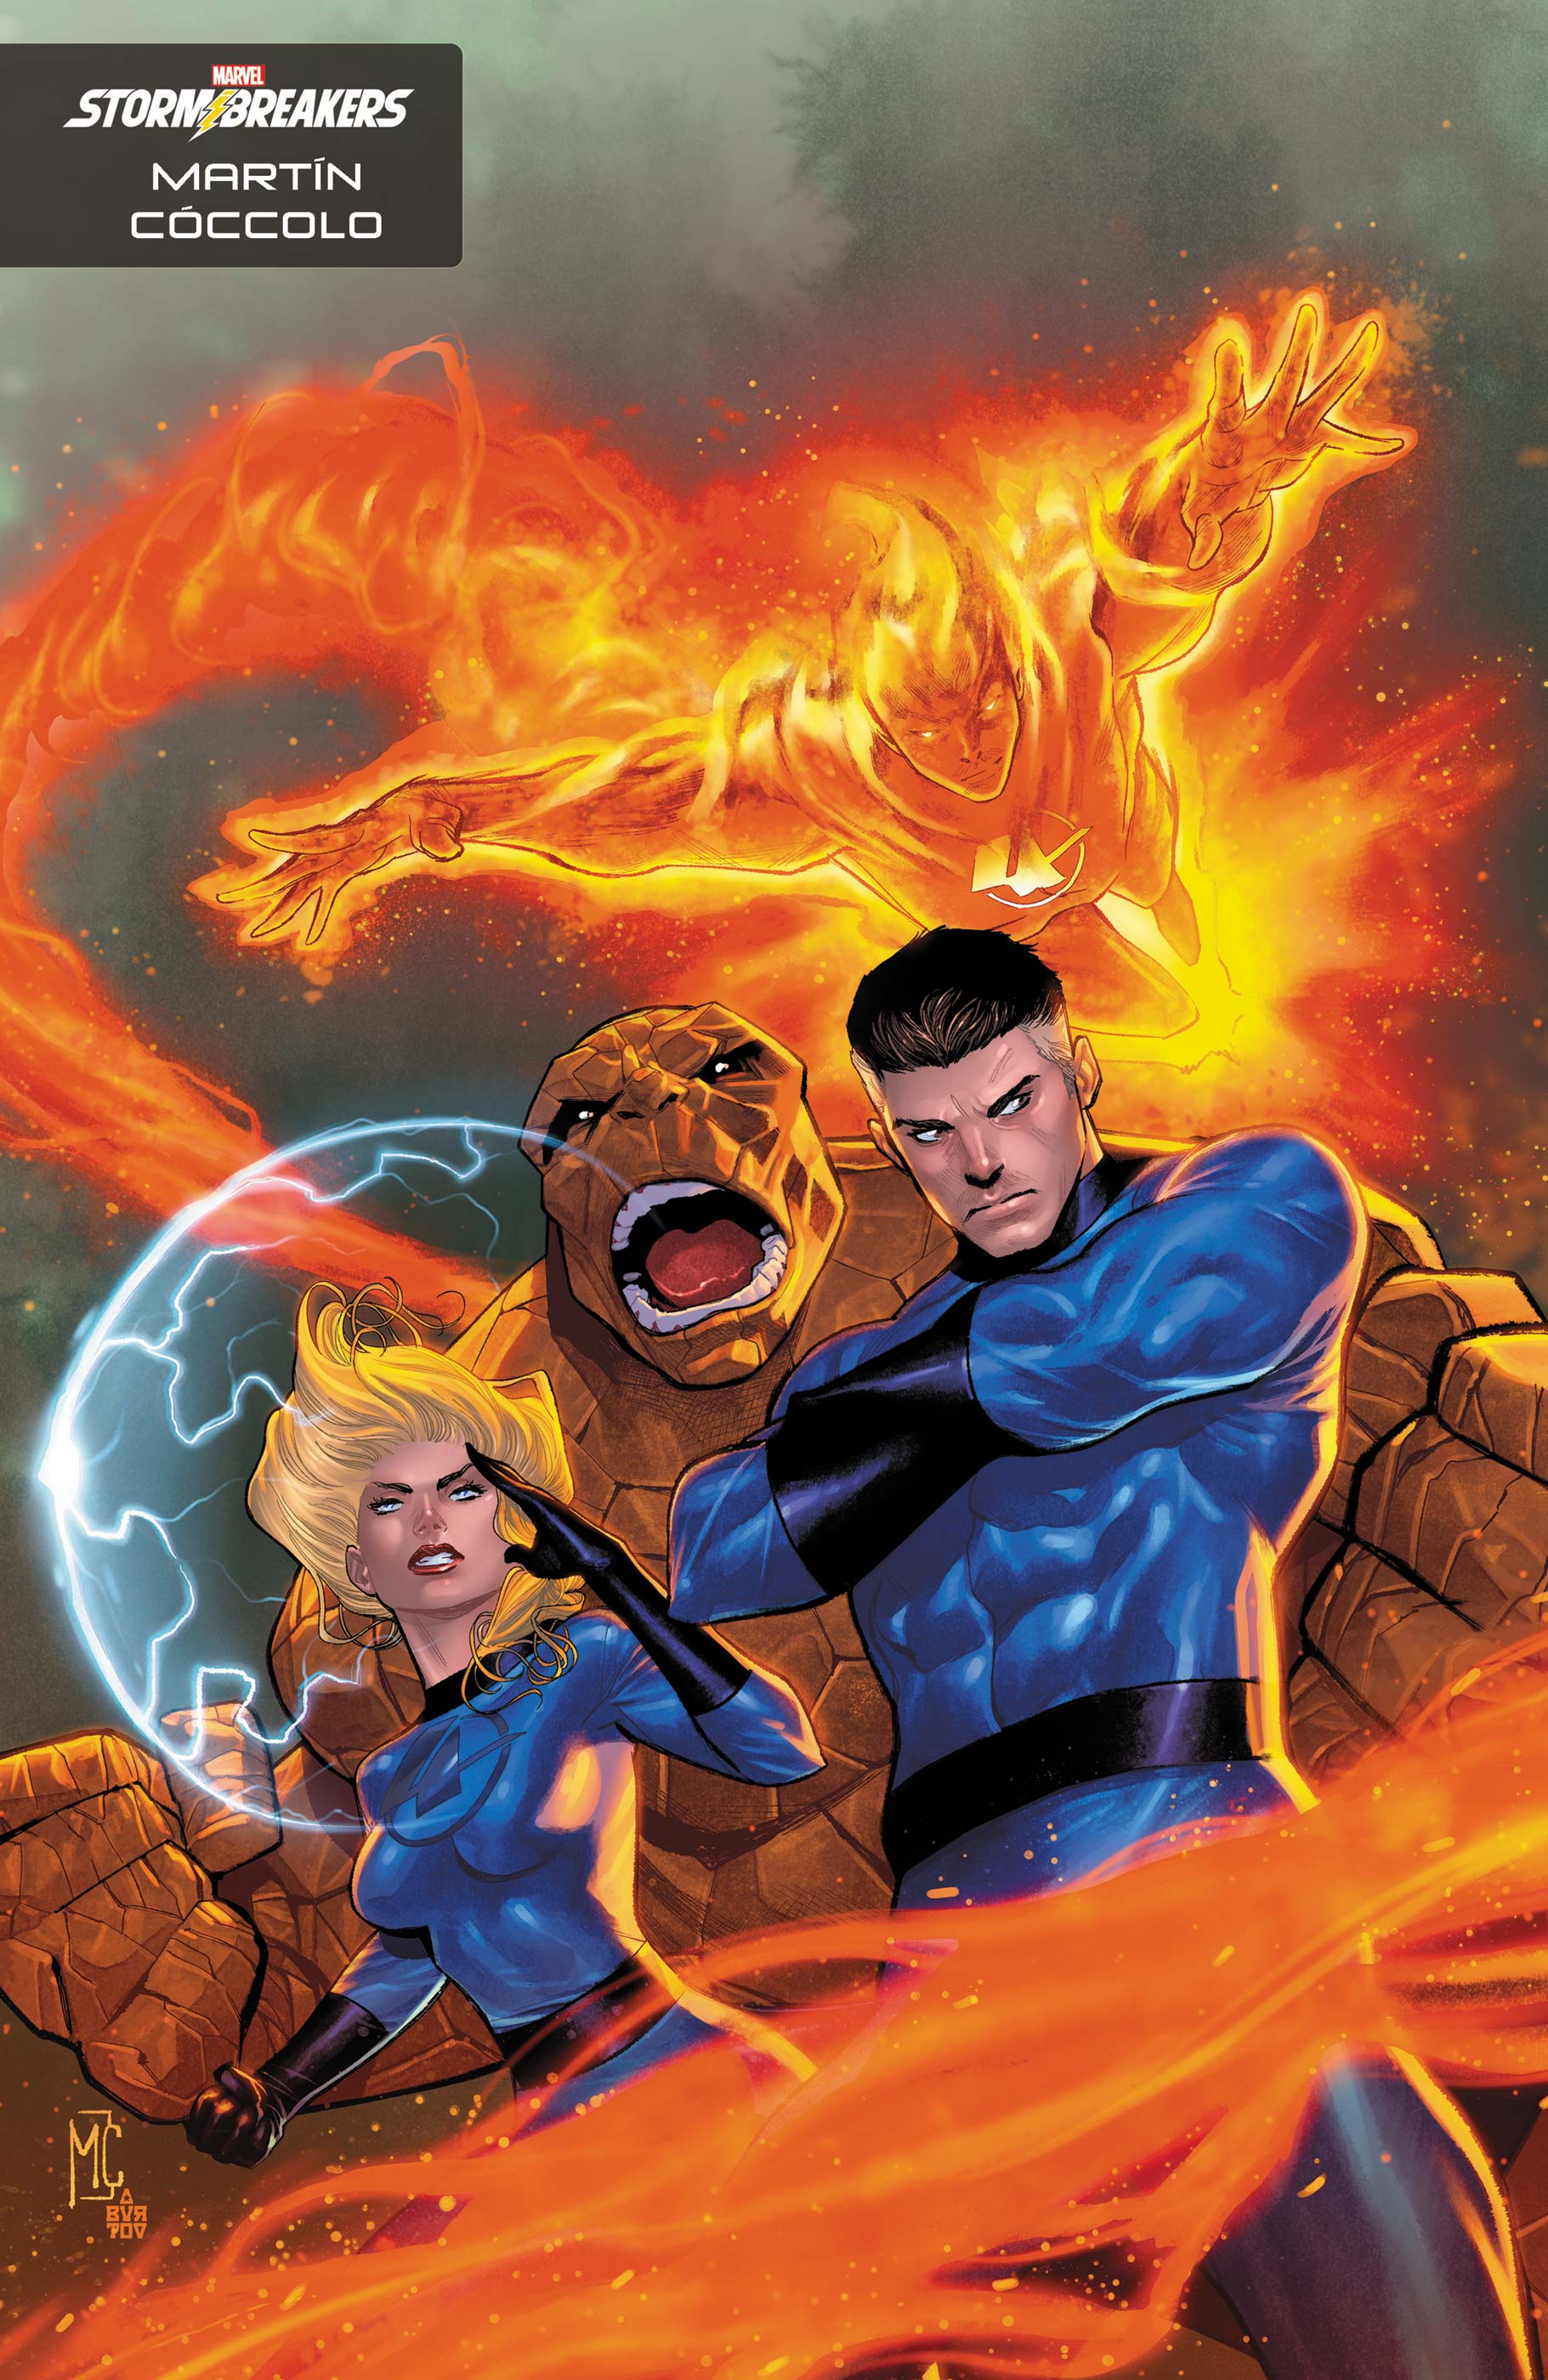 Fantastic Four (2022) #13 (Variant)